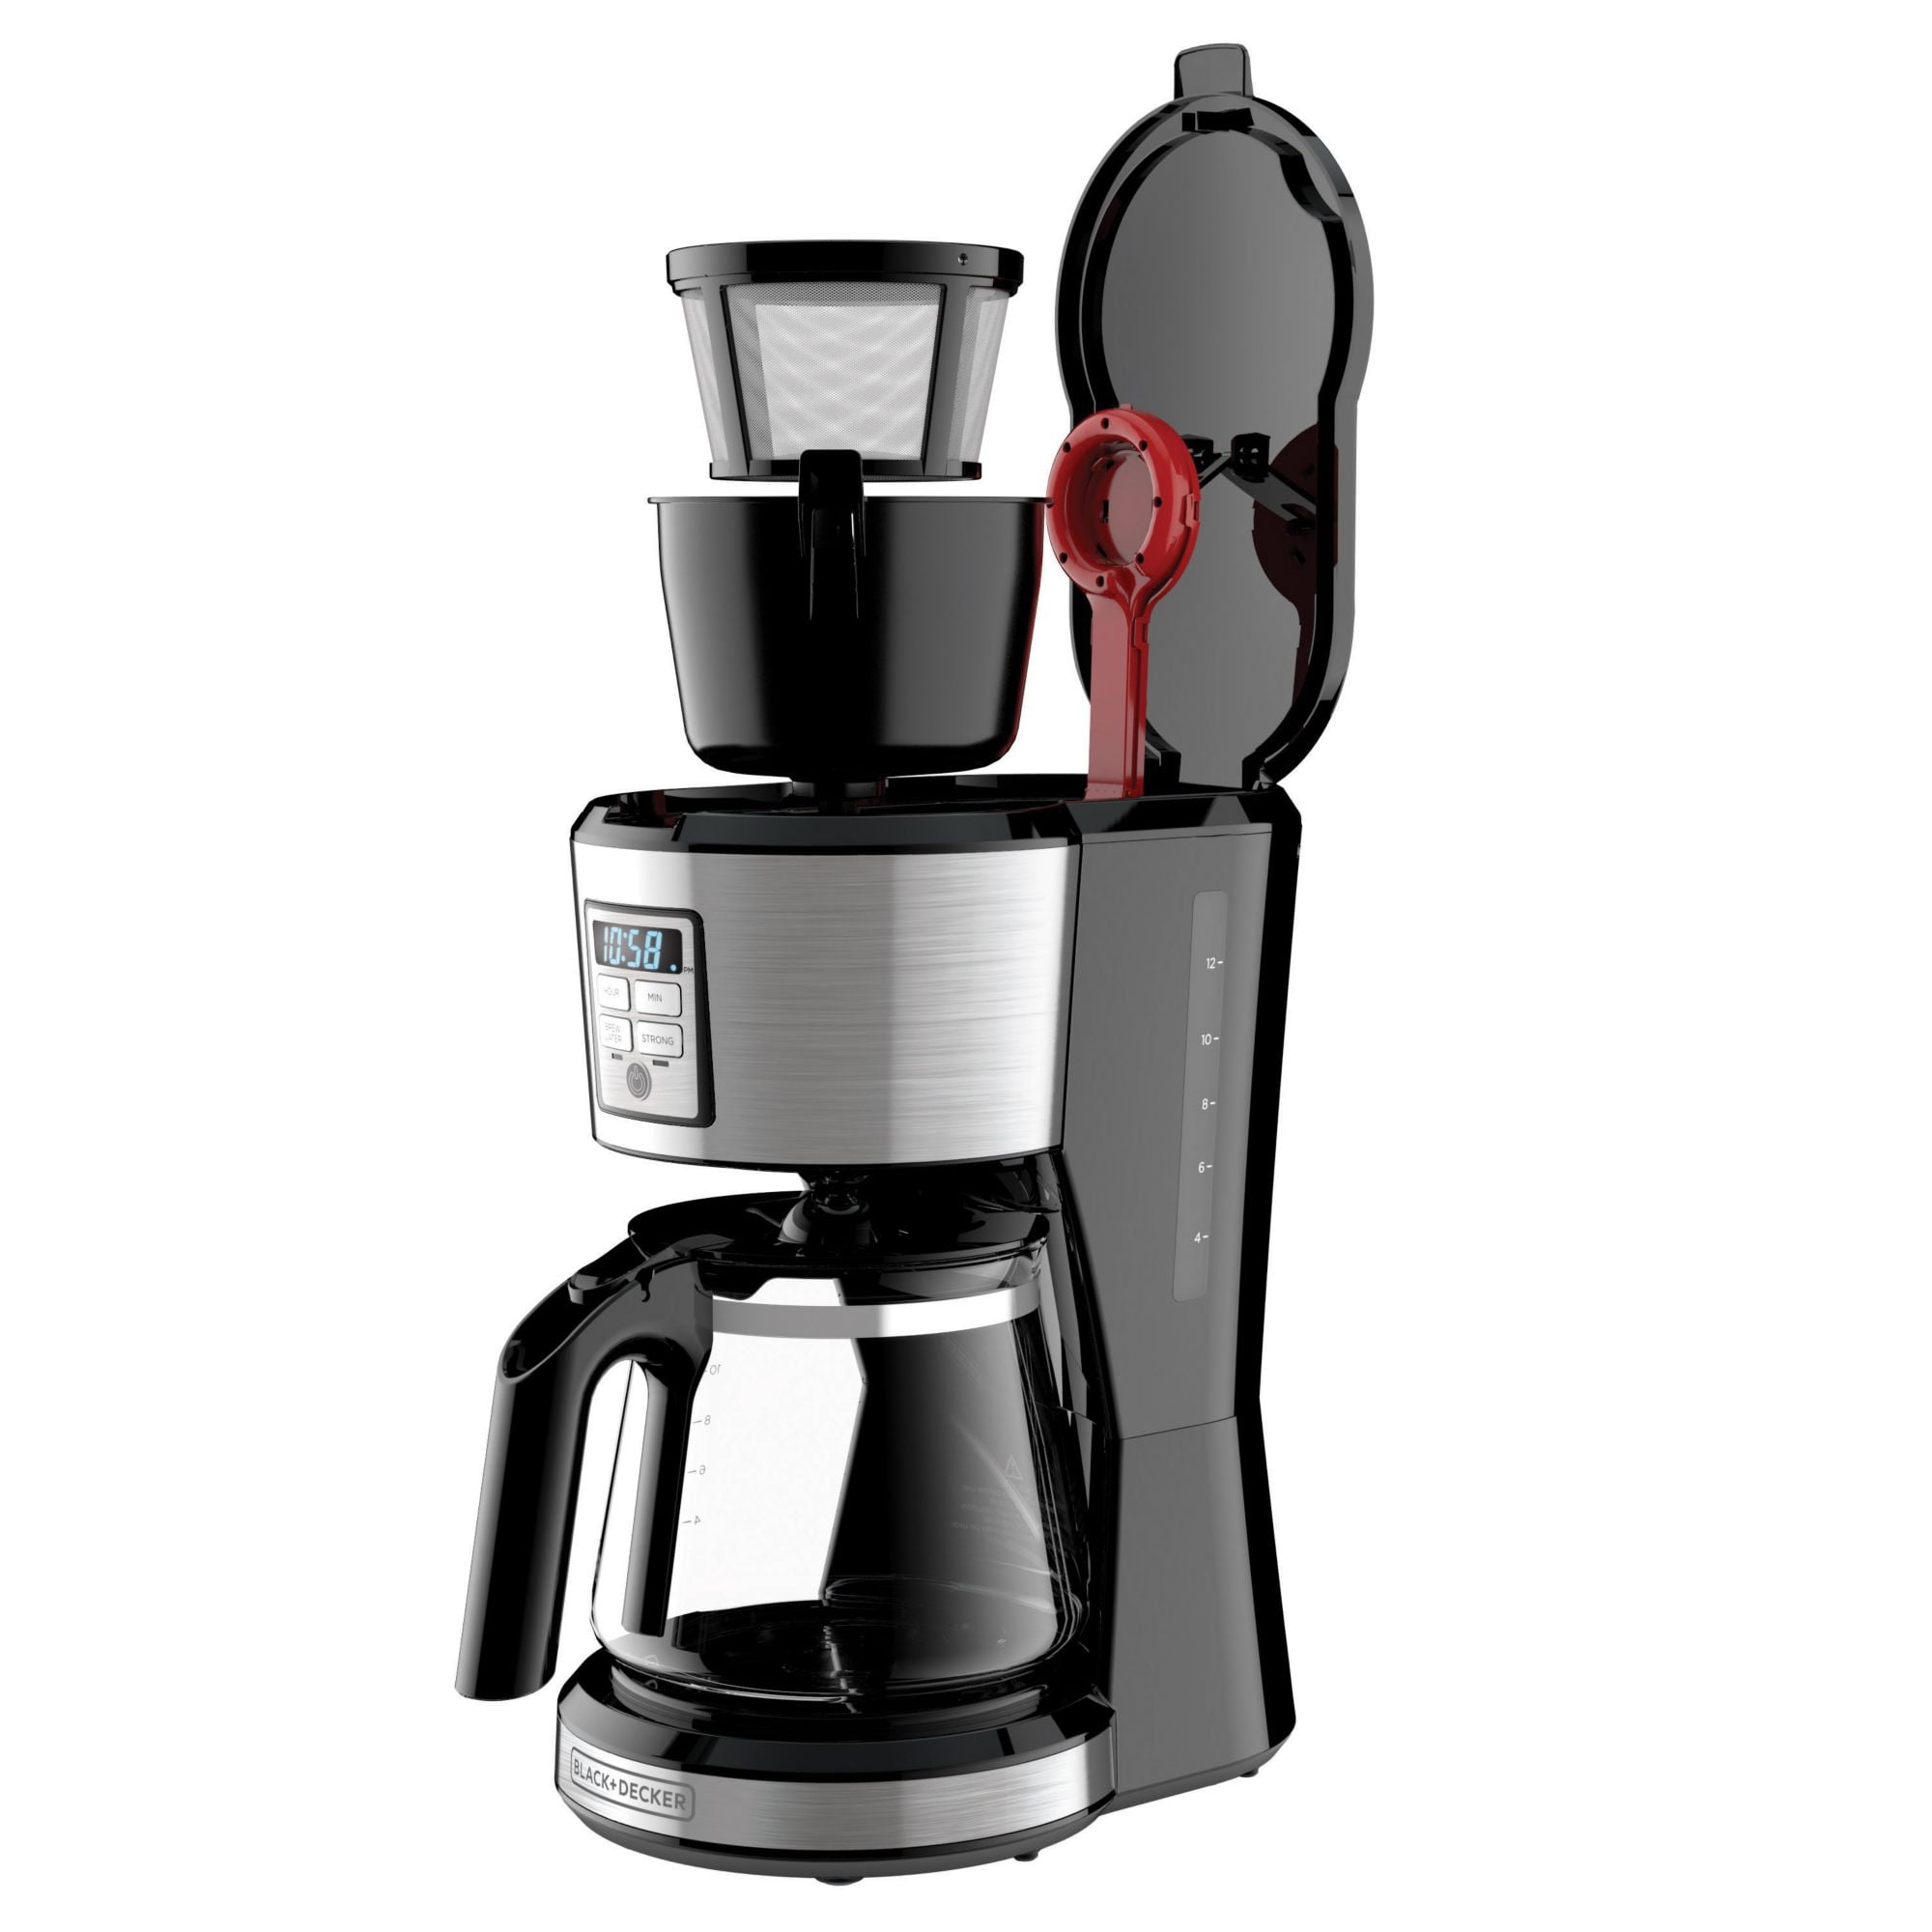 Black & Decker CM1609 Black 8-Cup Thermal Programmable Coffee Maker 